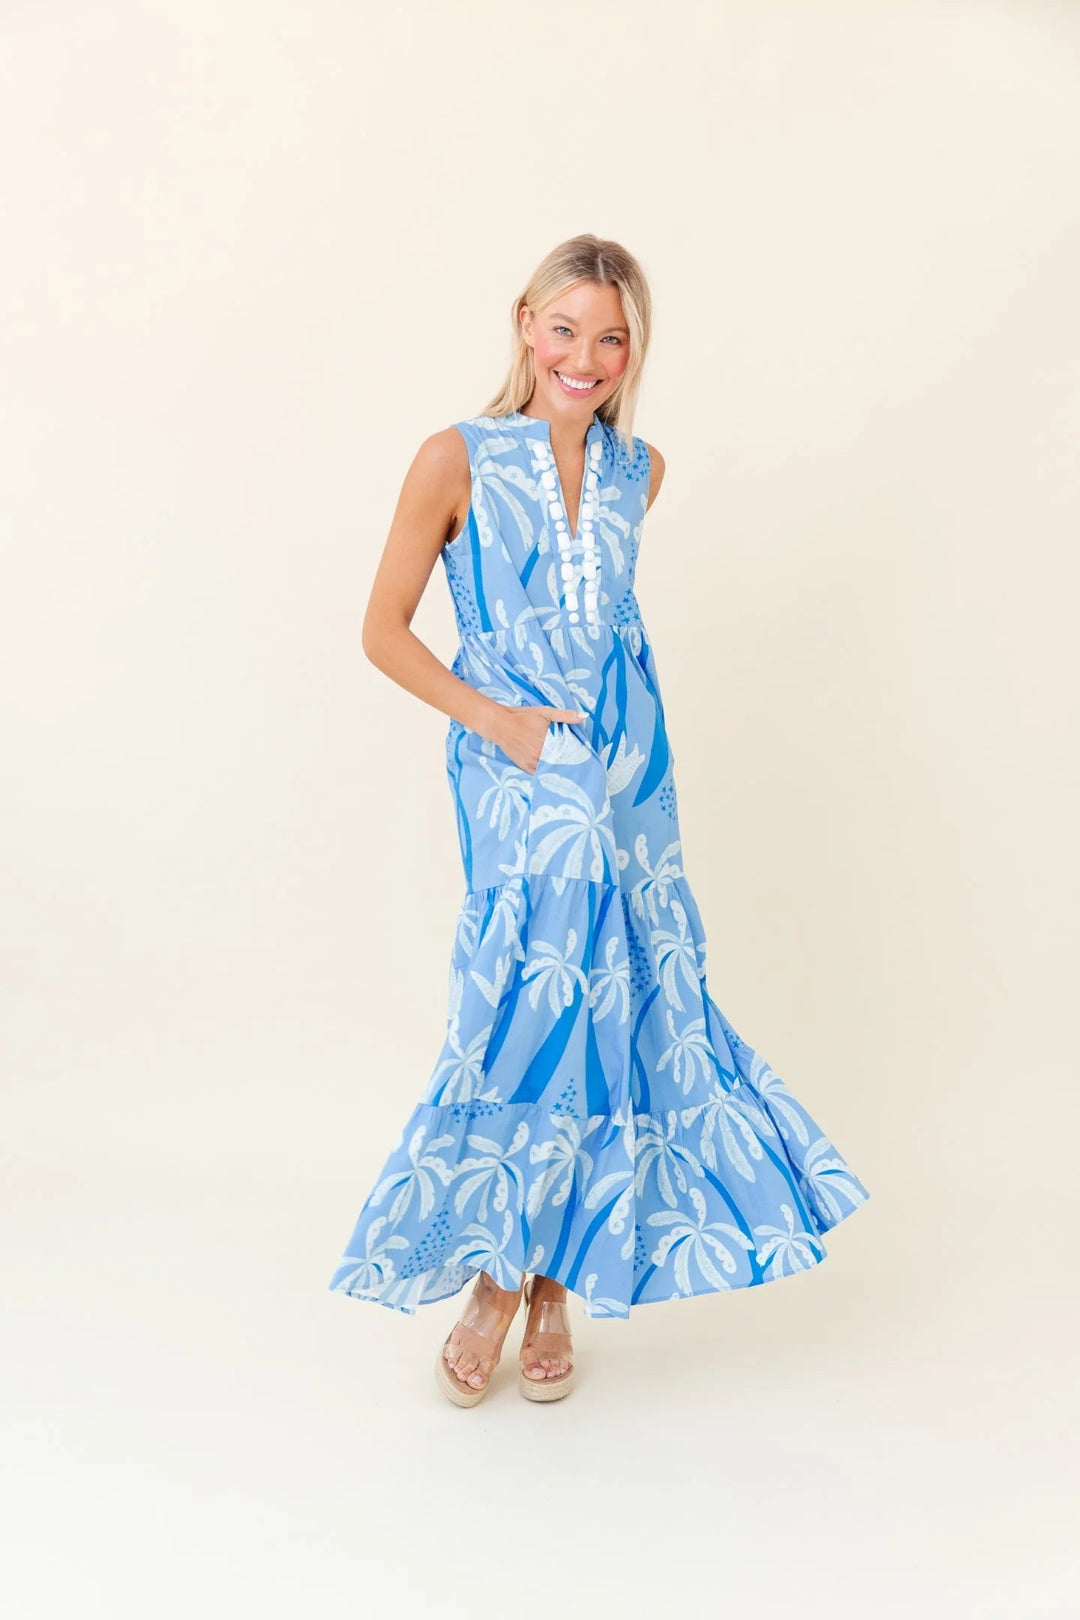 Sheridan French Dress Tessa Dress in Carolina Palm